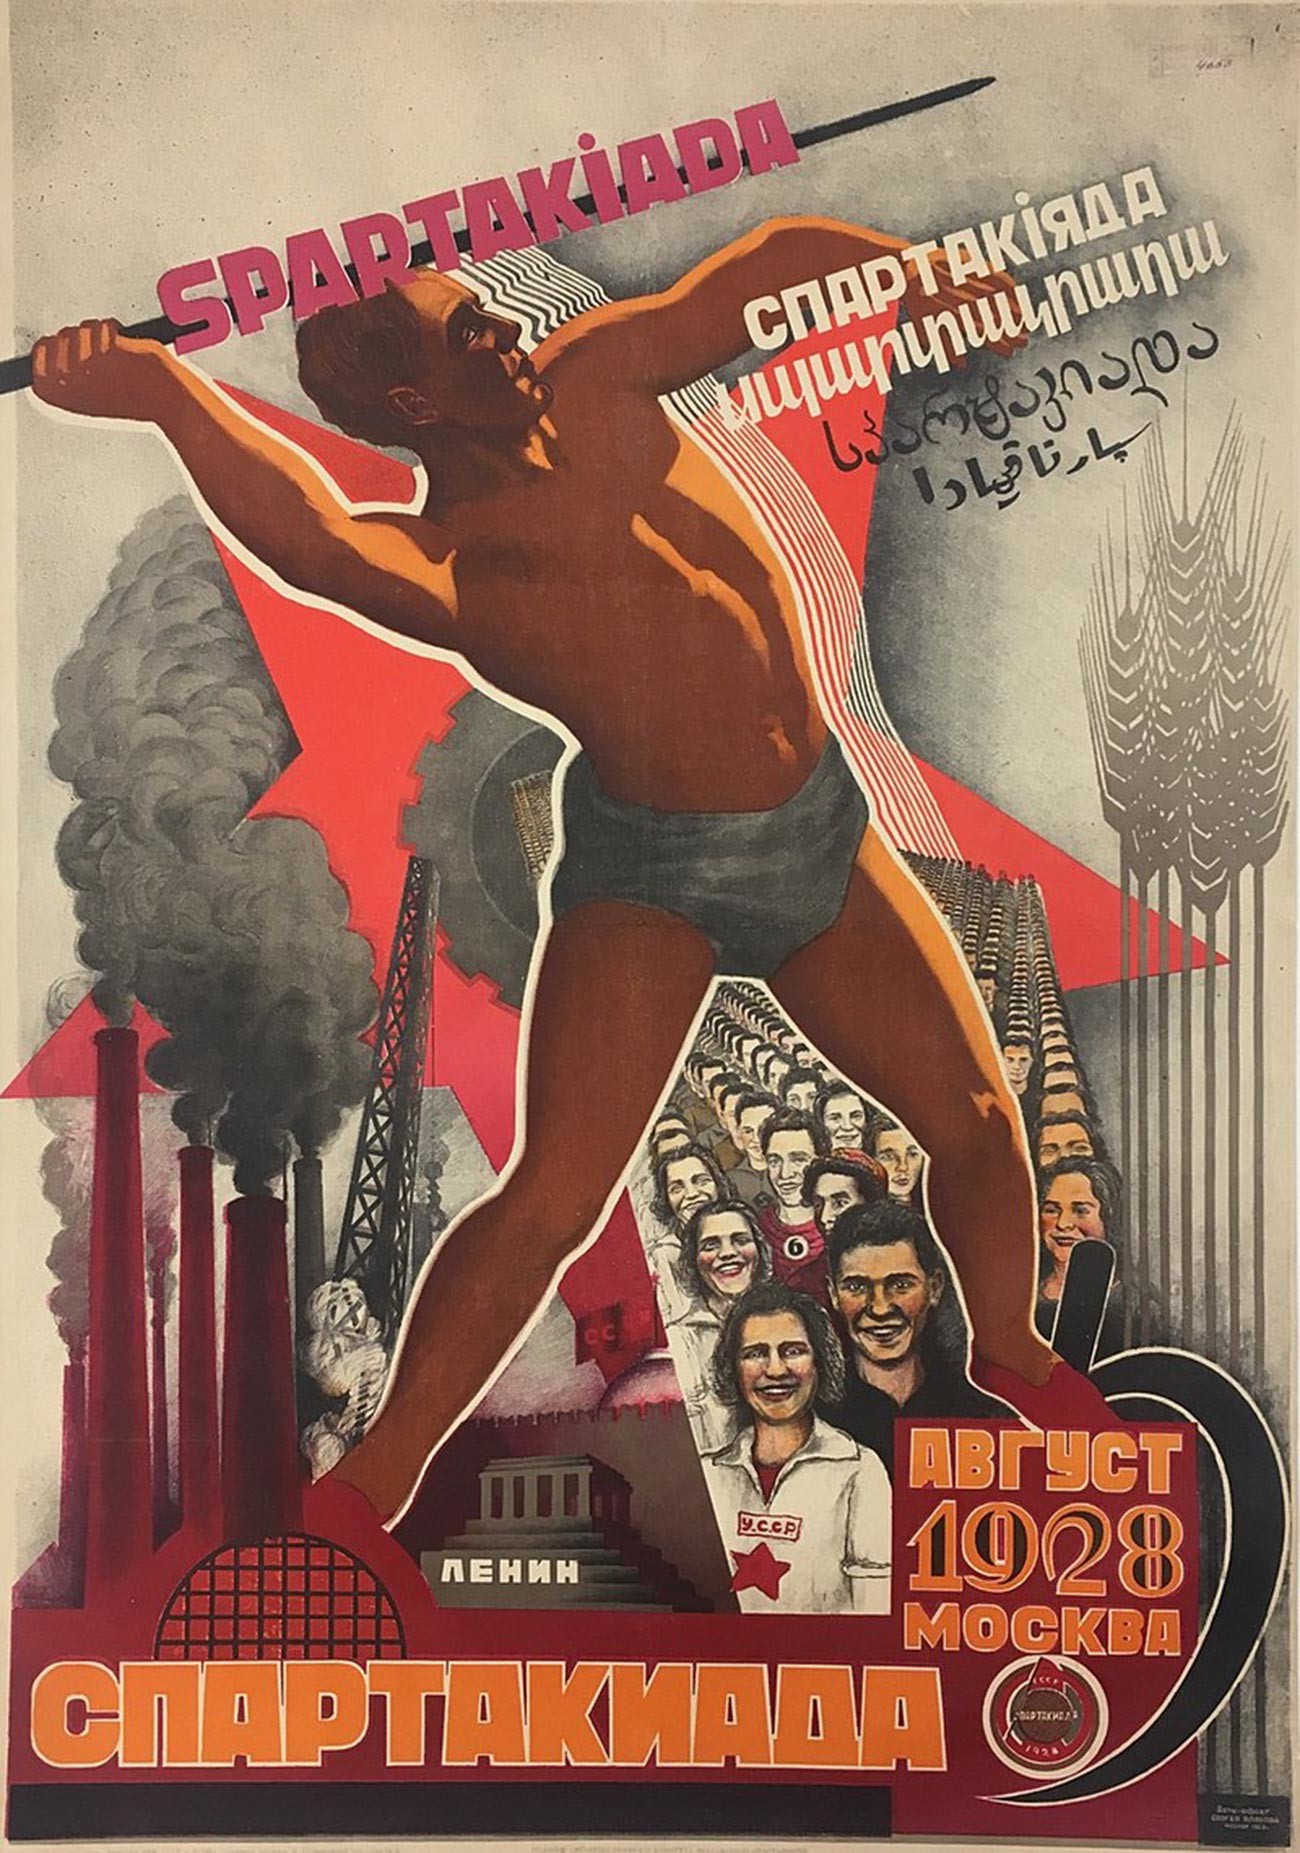 The Spartakiad-1928 poster